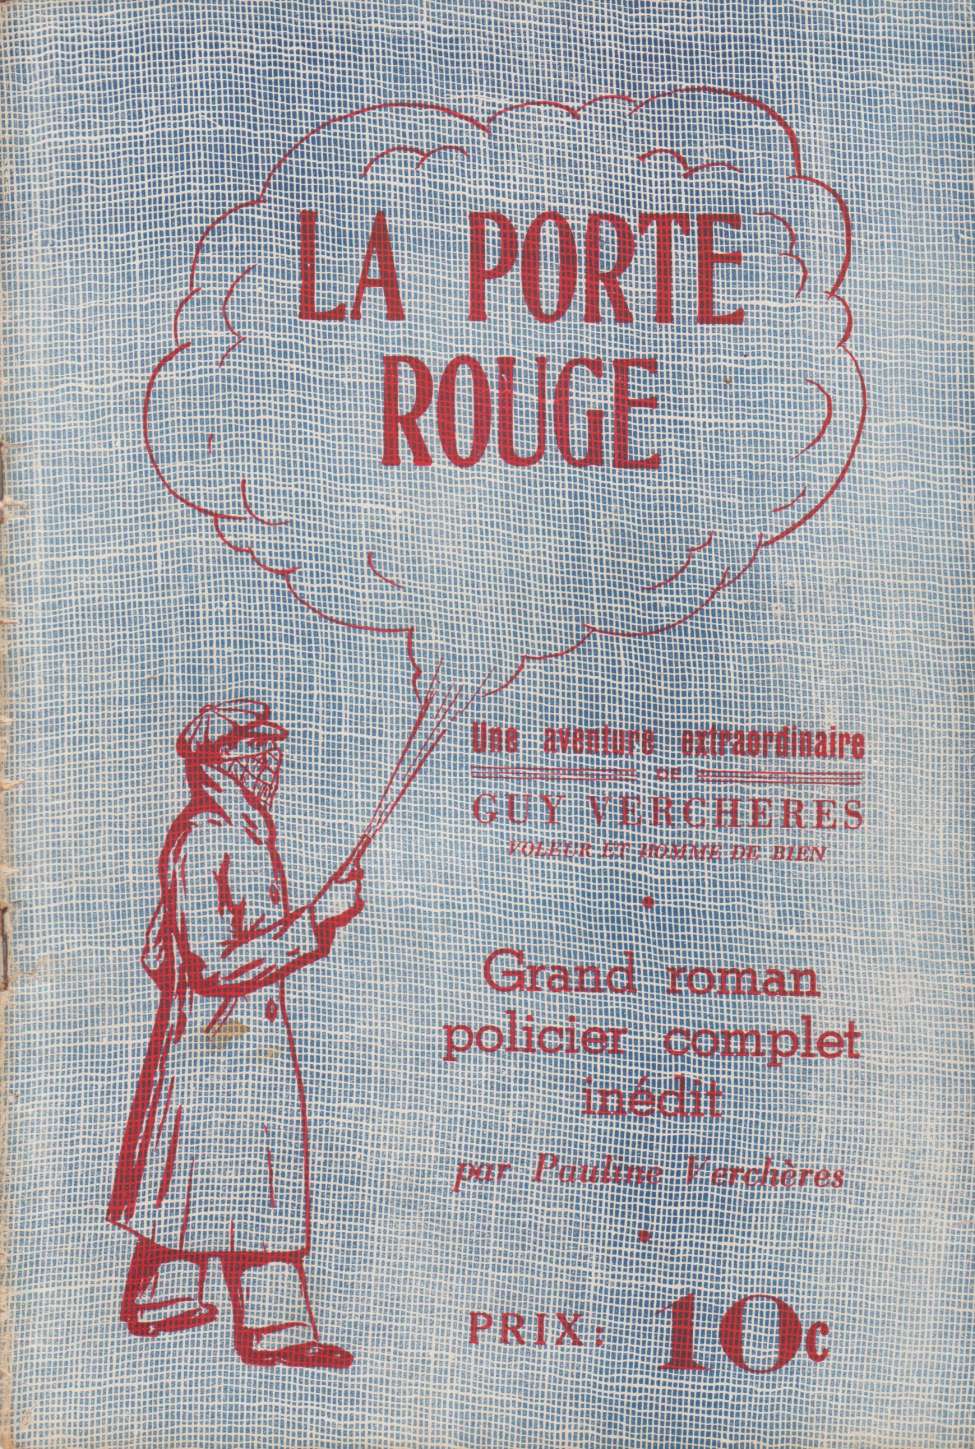 Comic Book Cover For Guy Verchères v1 1 - La porte rouge